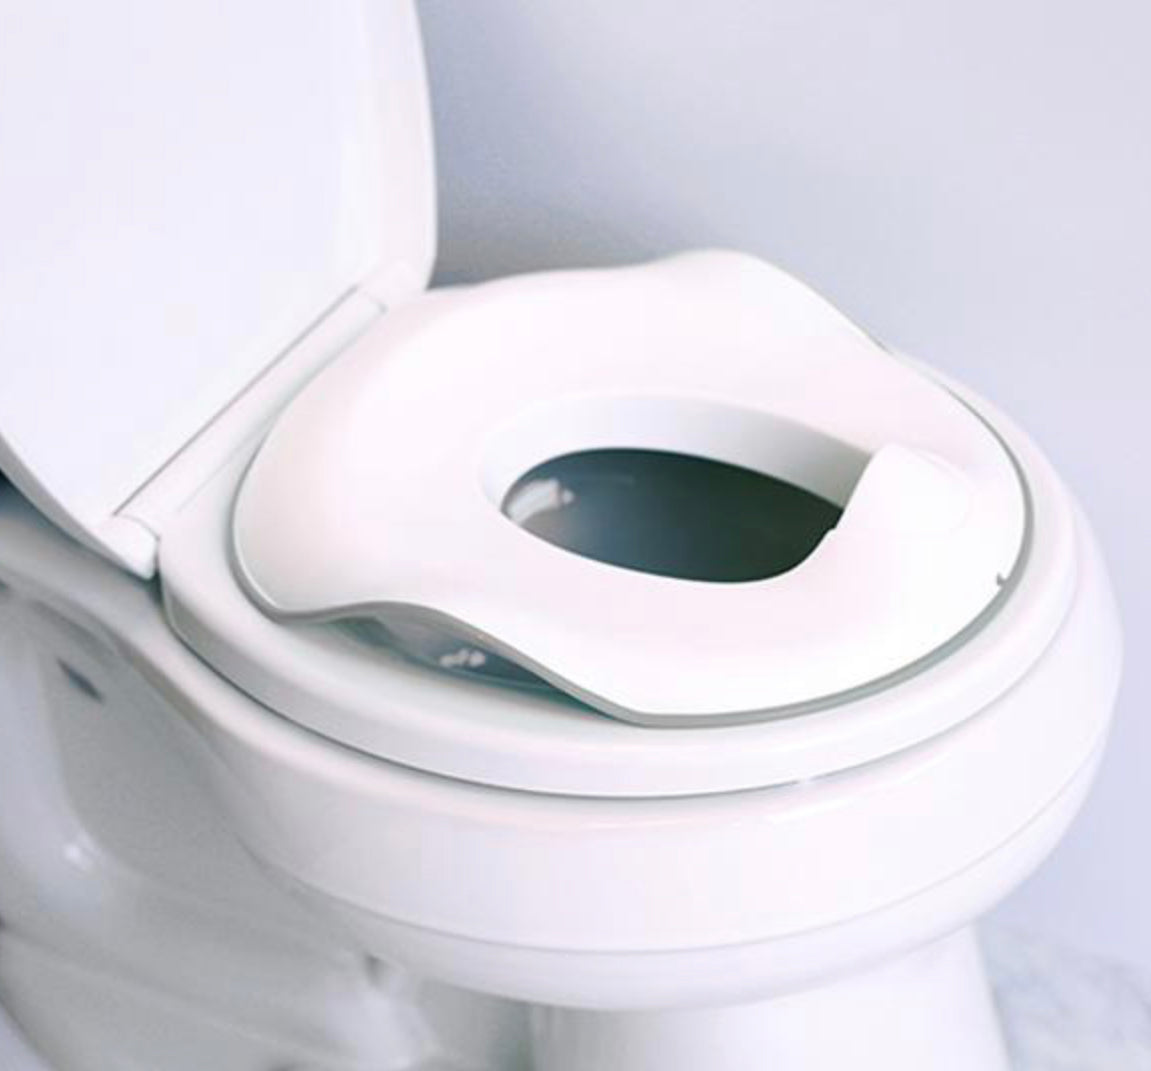 Ubbi | Toilet Trainer